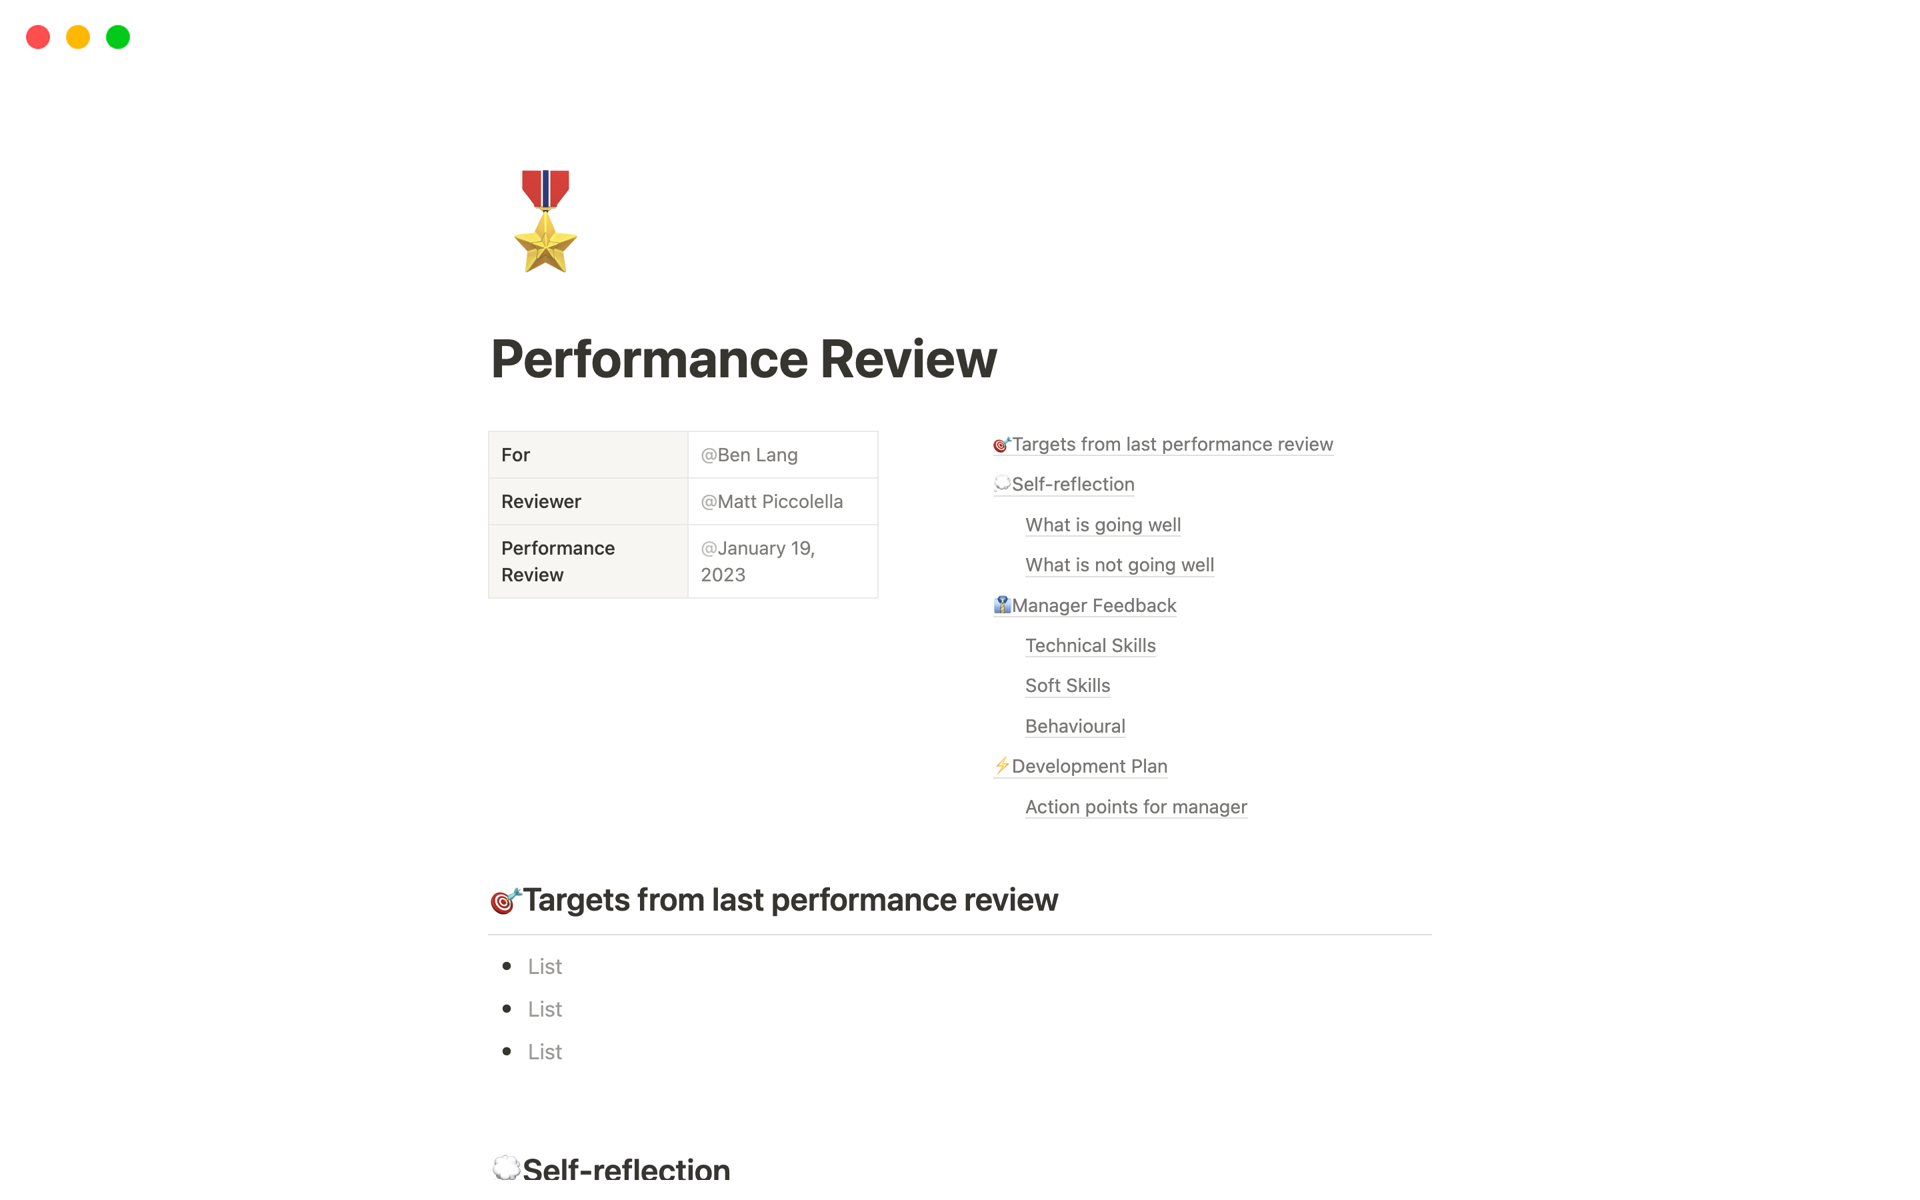 Vista previa de plantilla para Performance Review